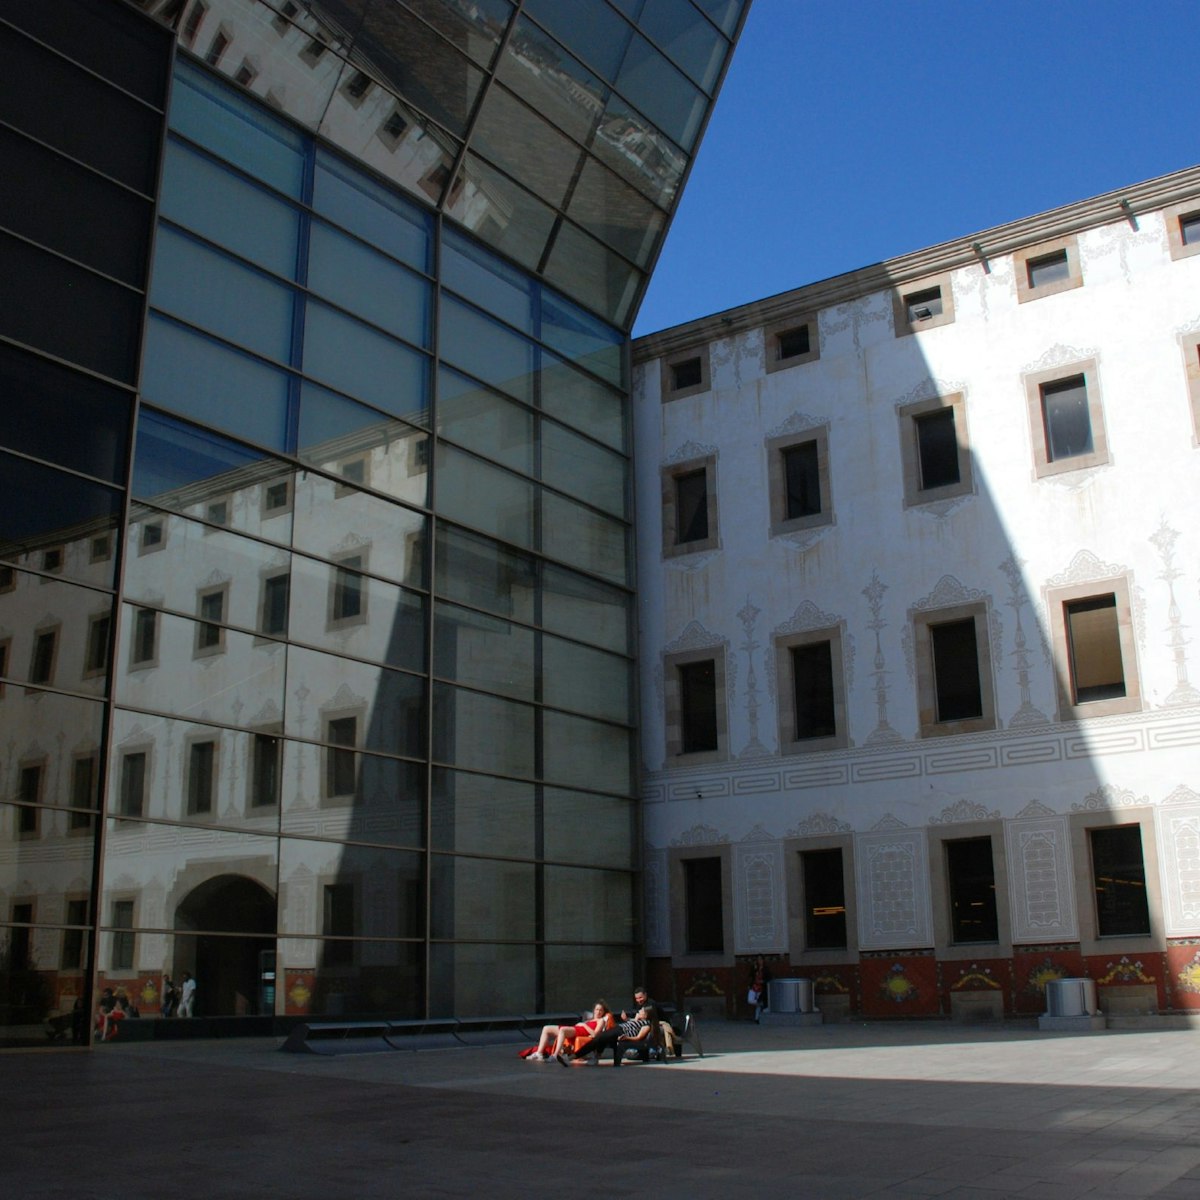 Inside the courtyard of CCCB (Centre de Cultura Contemporània de Barcelona).